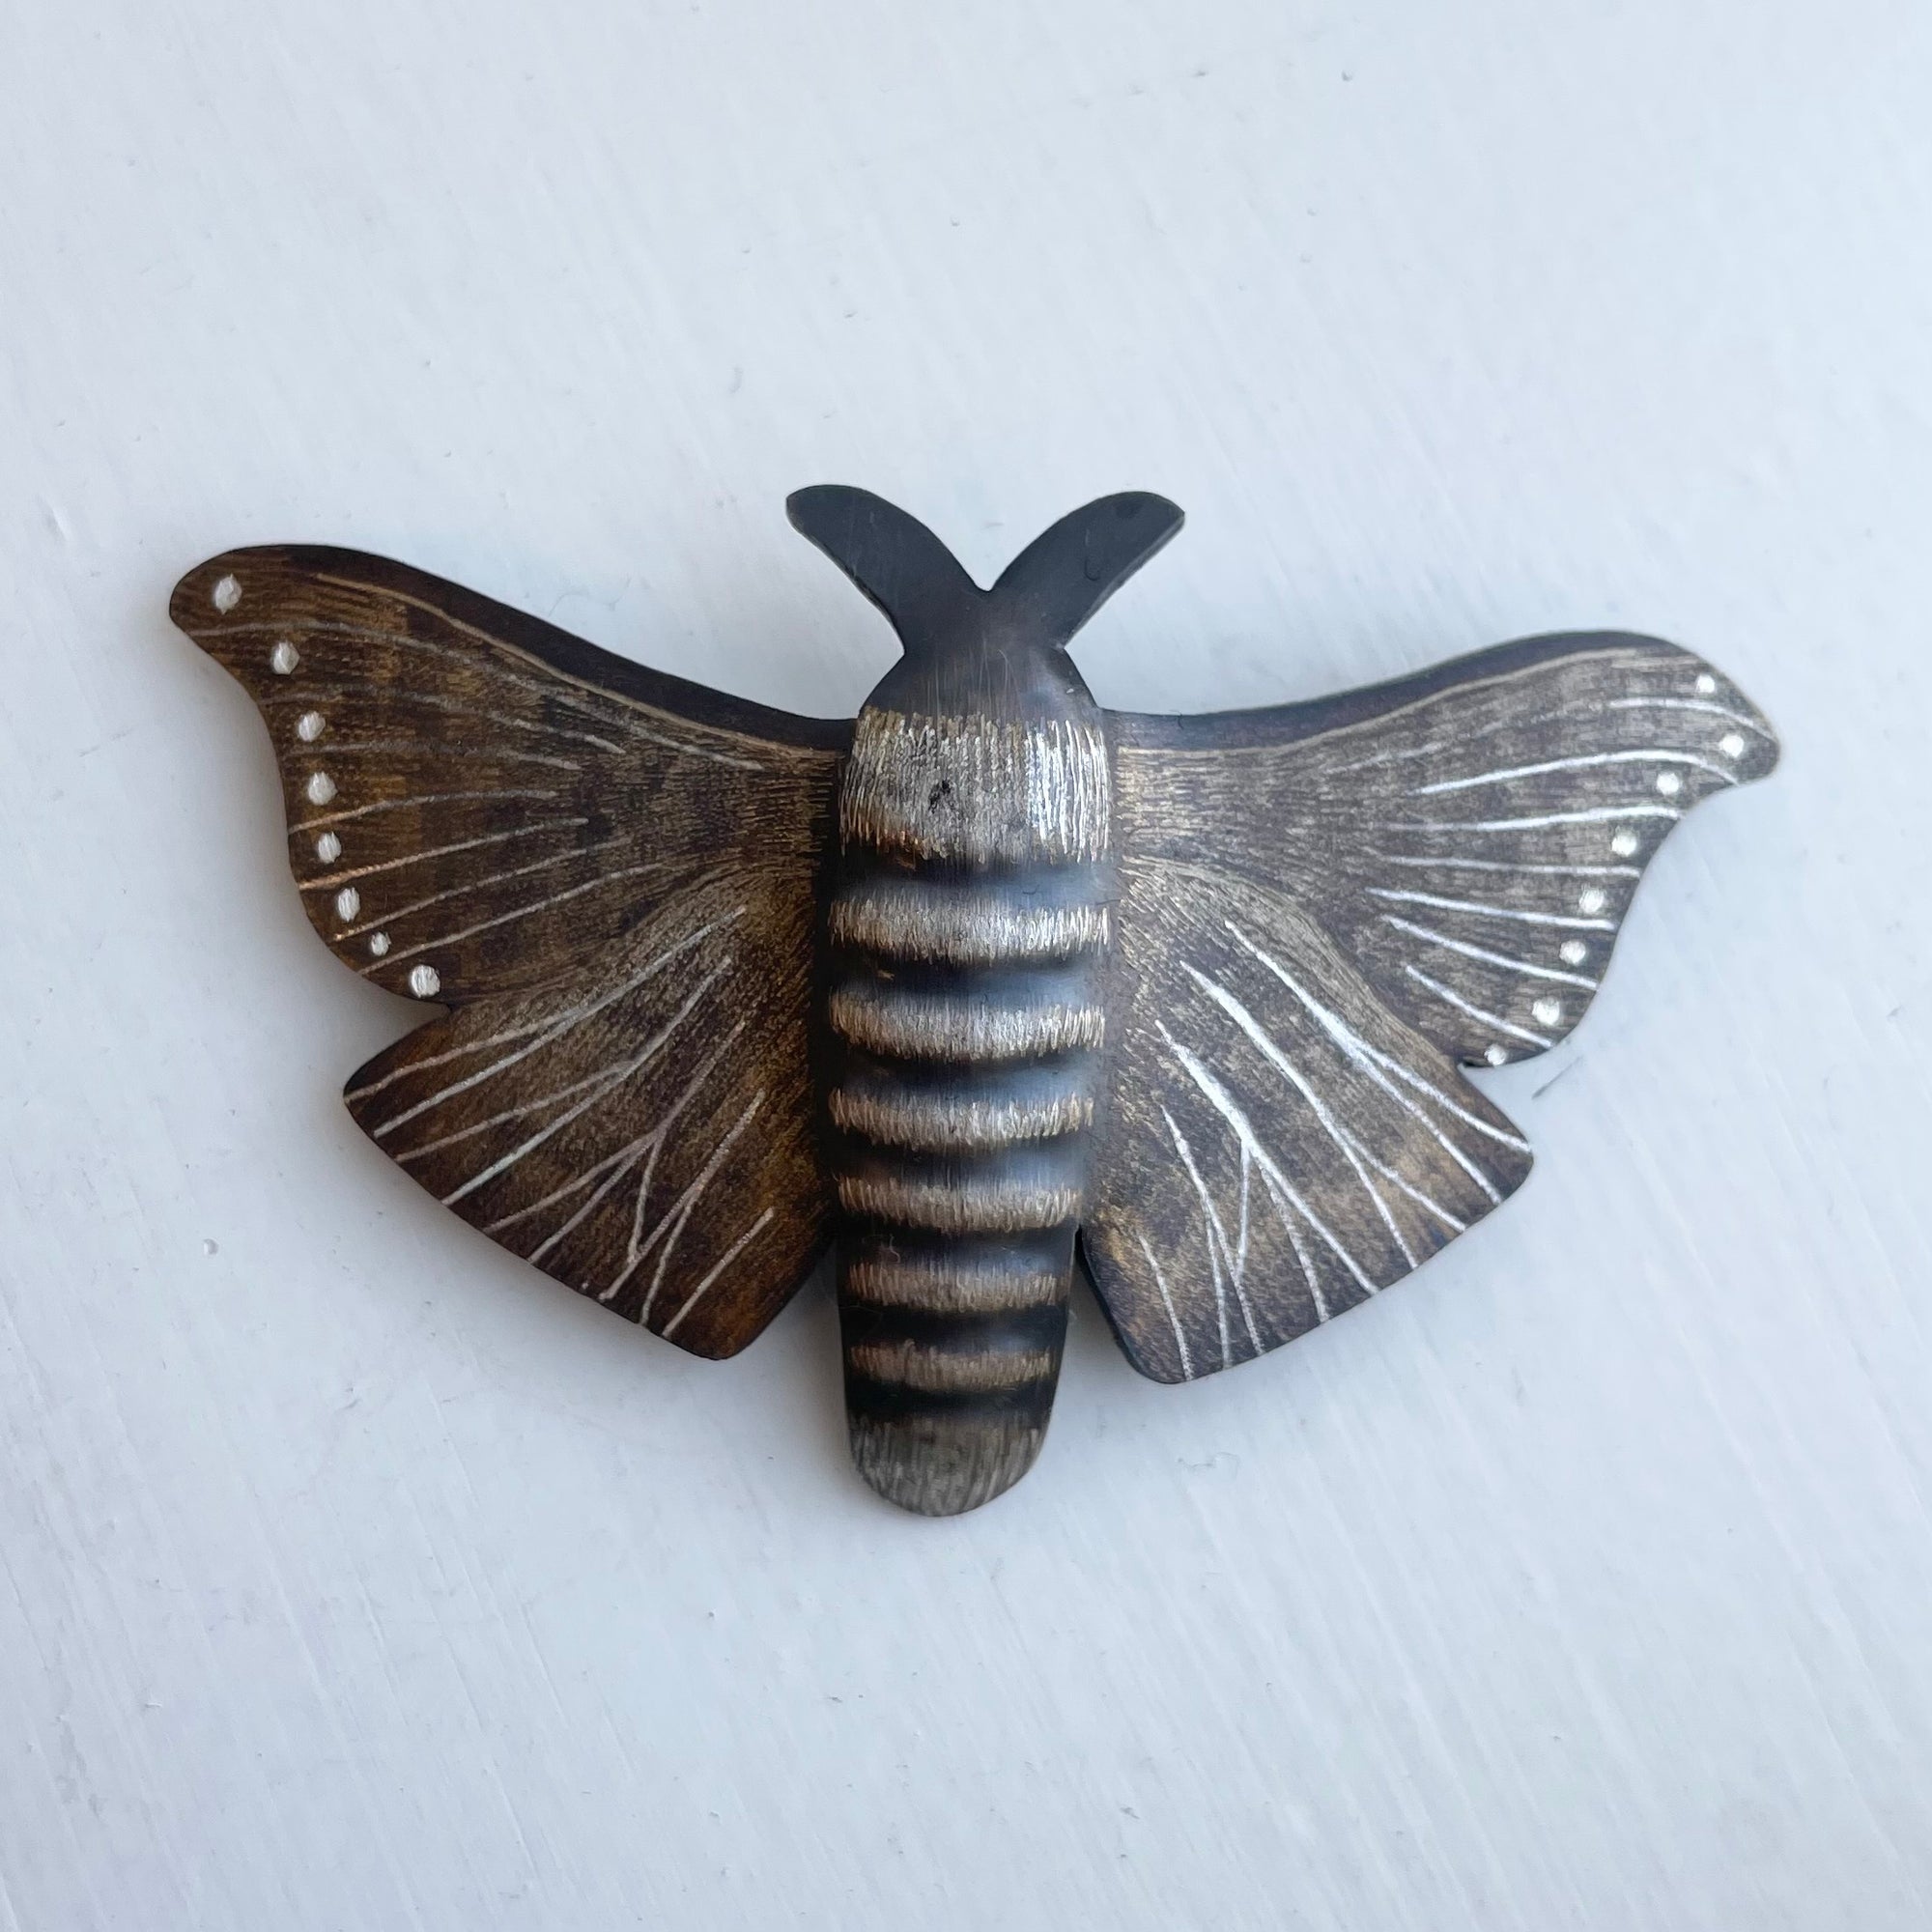 Puriri Moth Brooch